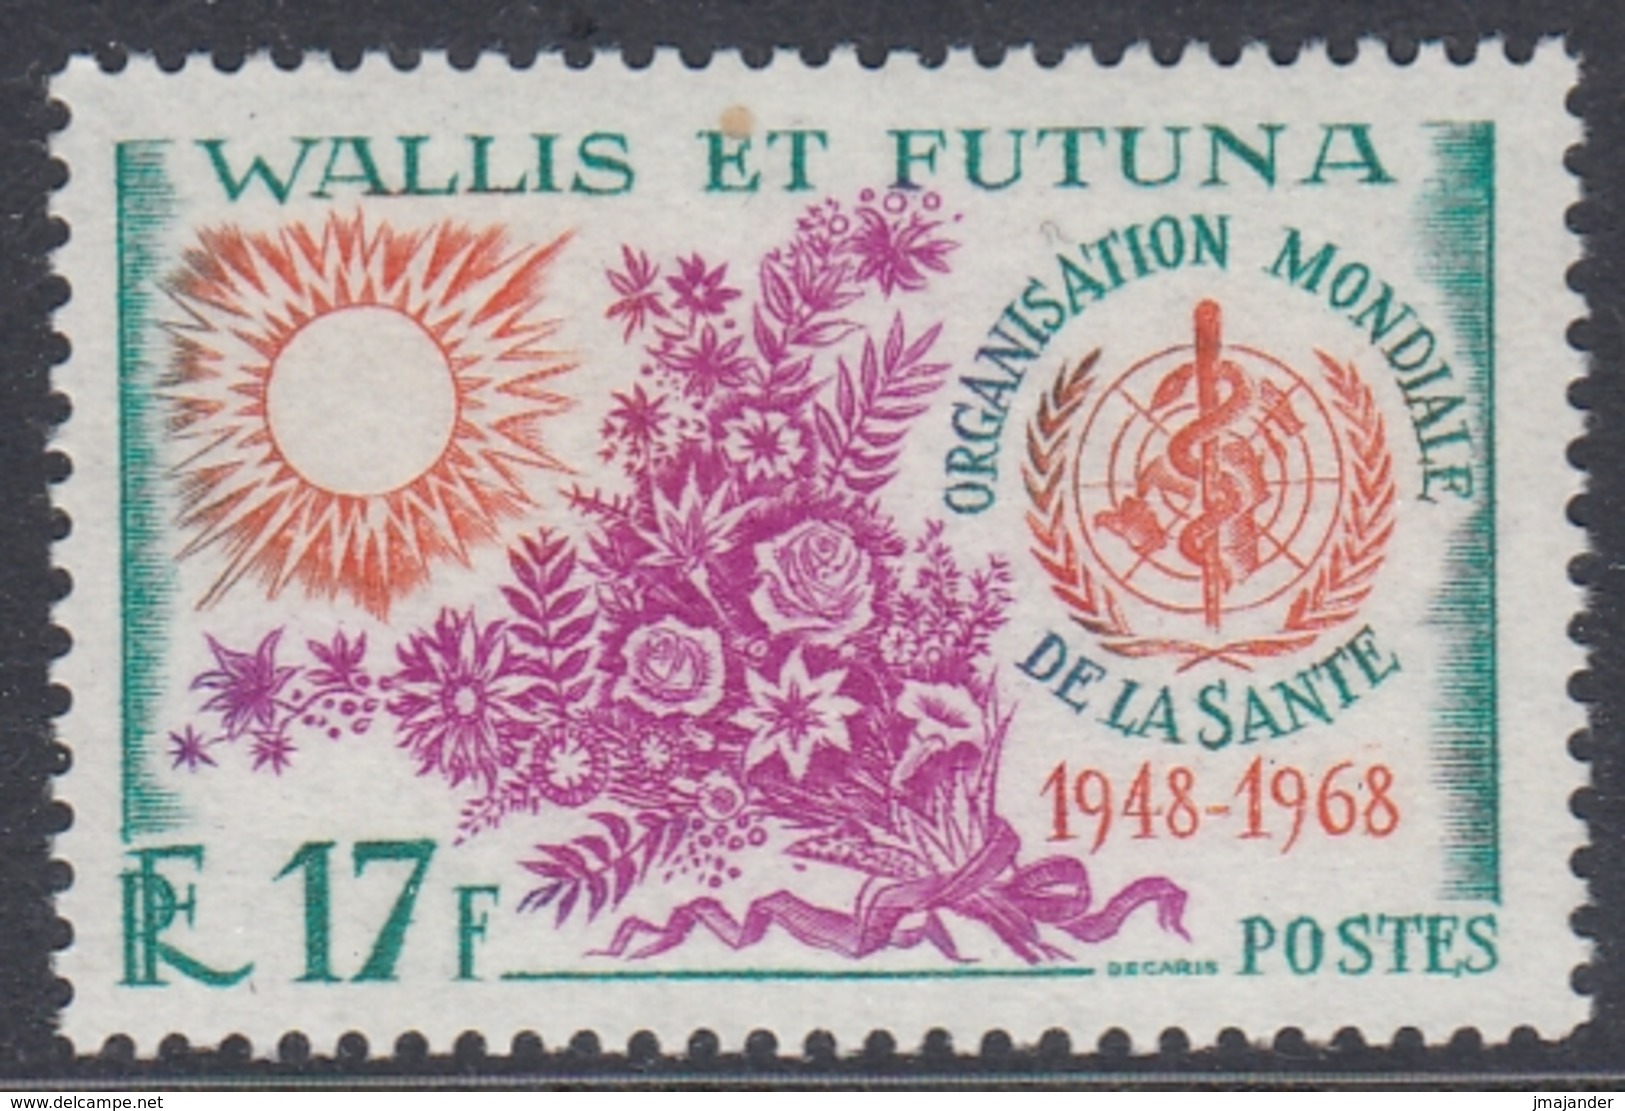 Wallis And Futuna 1968 - The 20th Anniversary Of WHO - Mi 217 ** MNH - Unused Stamps